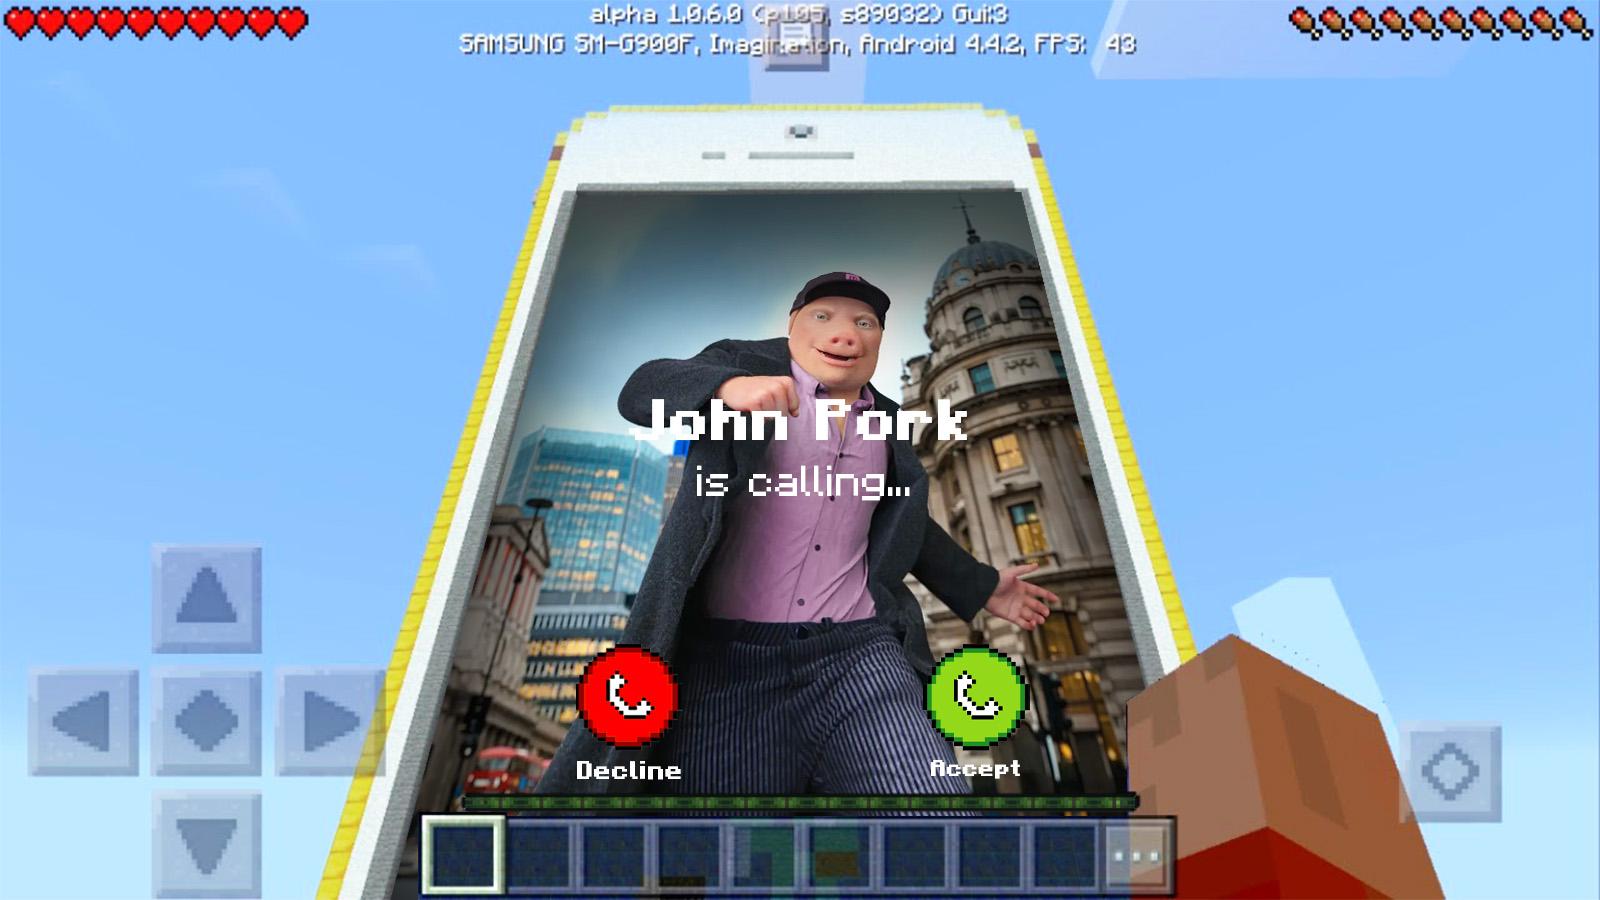 You accepted John Pork's call! - Roblox